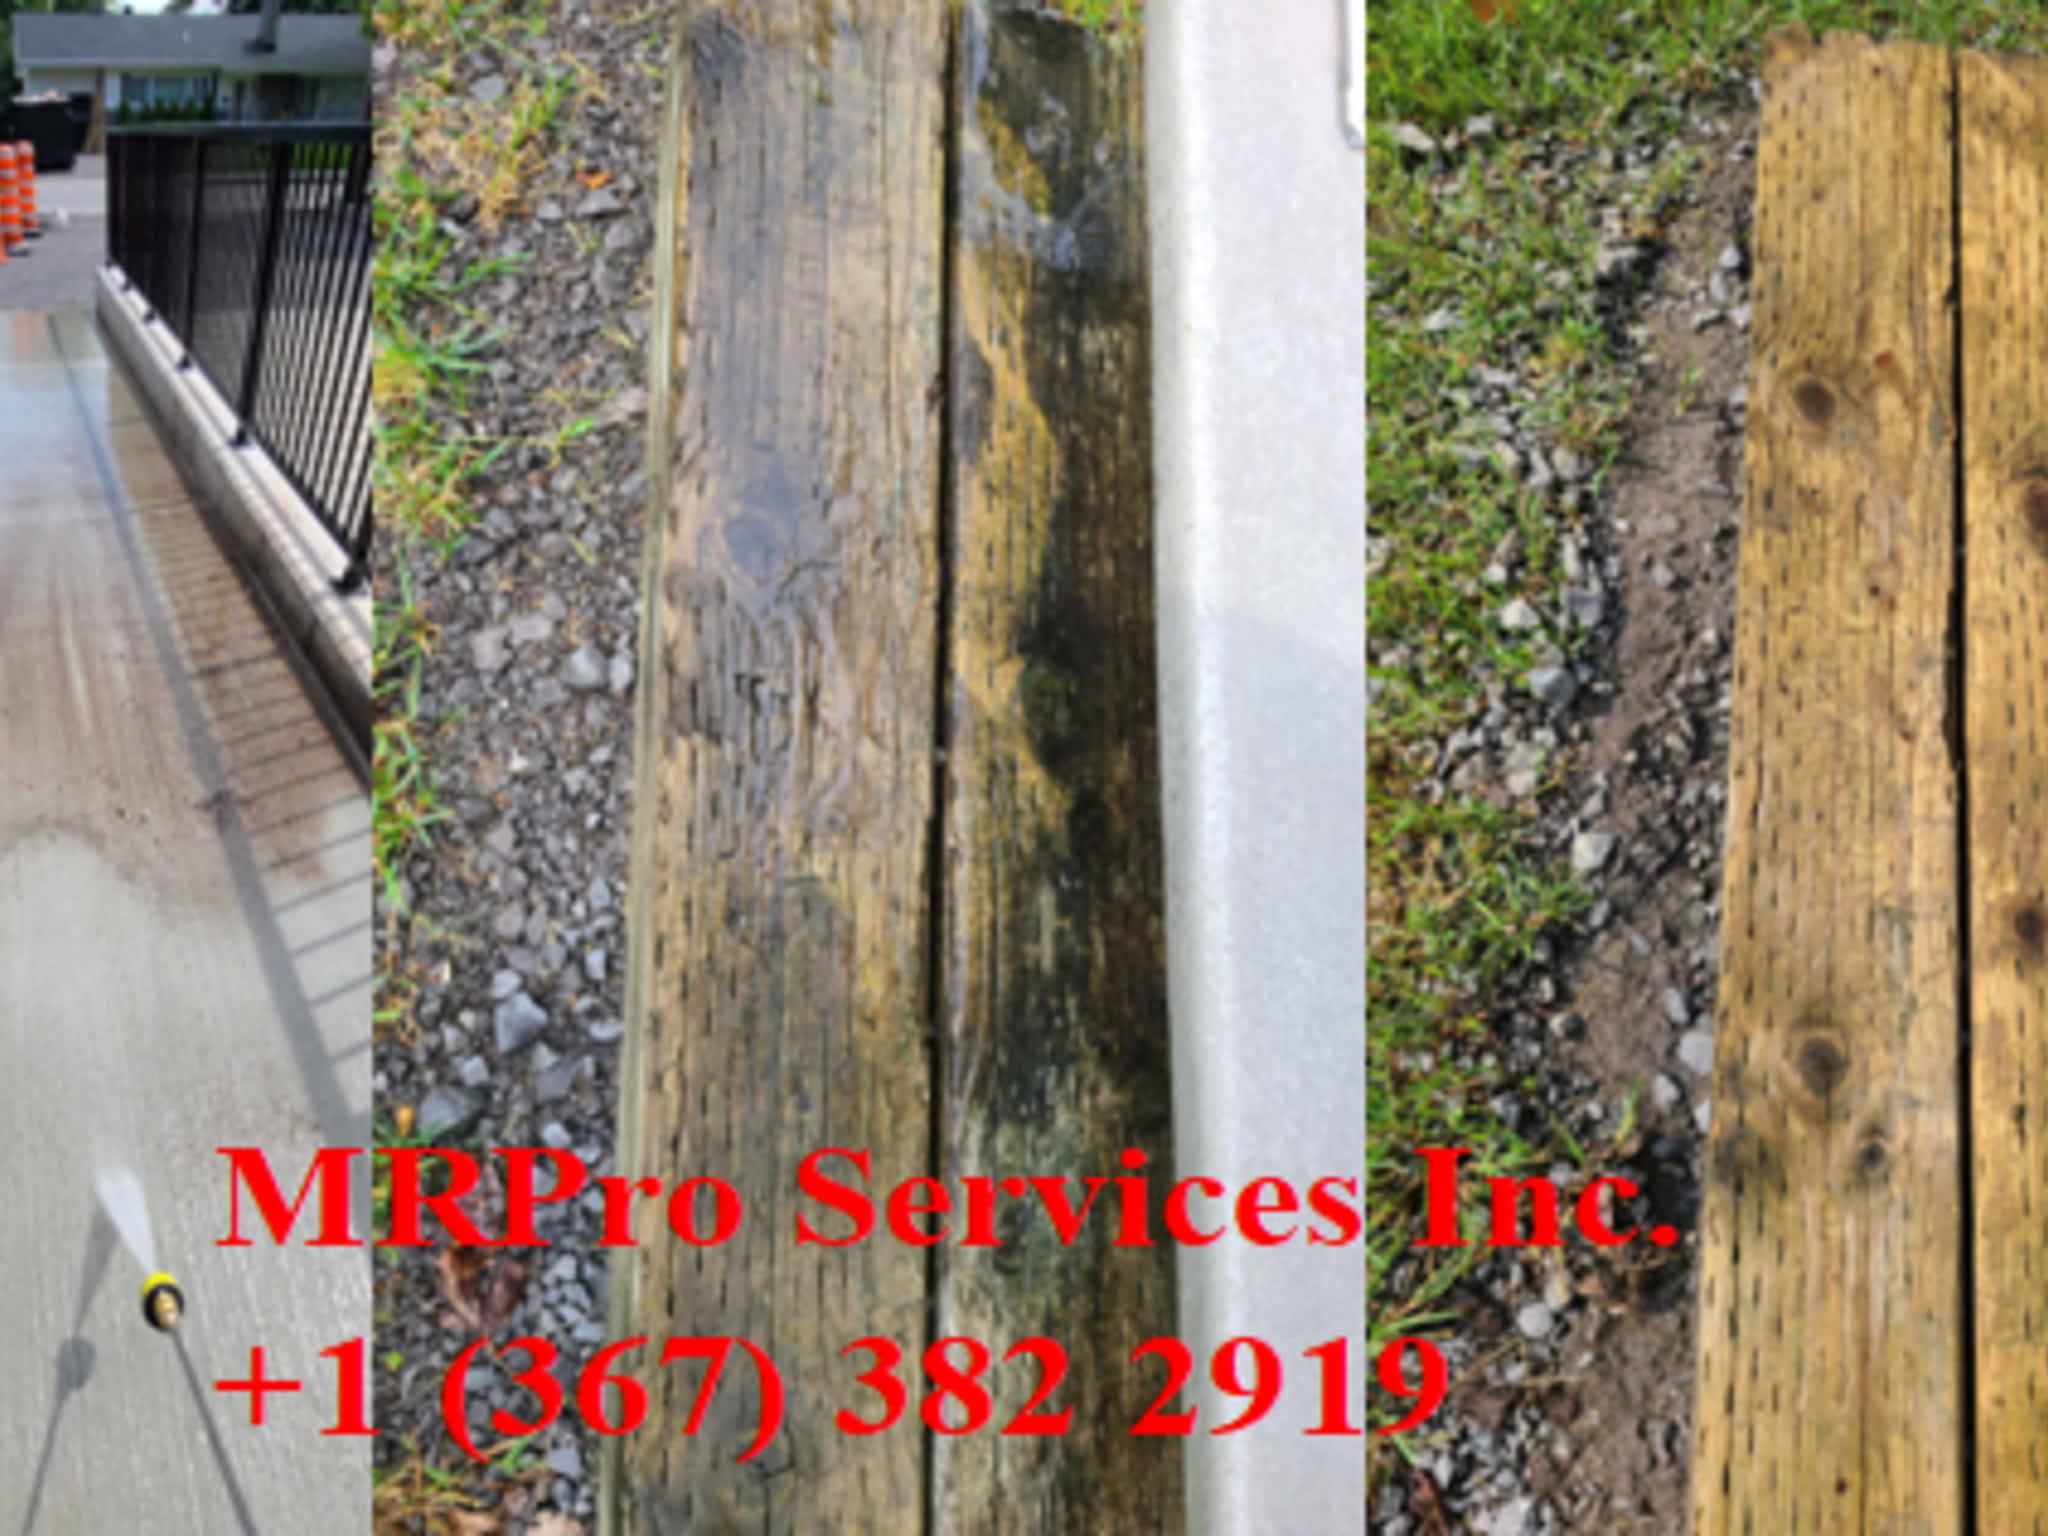 photo MRPro Services Inc.